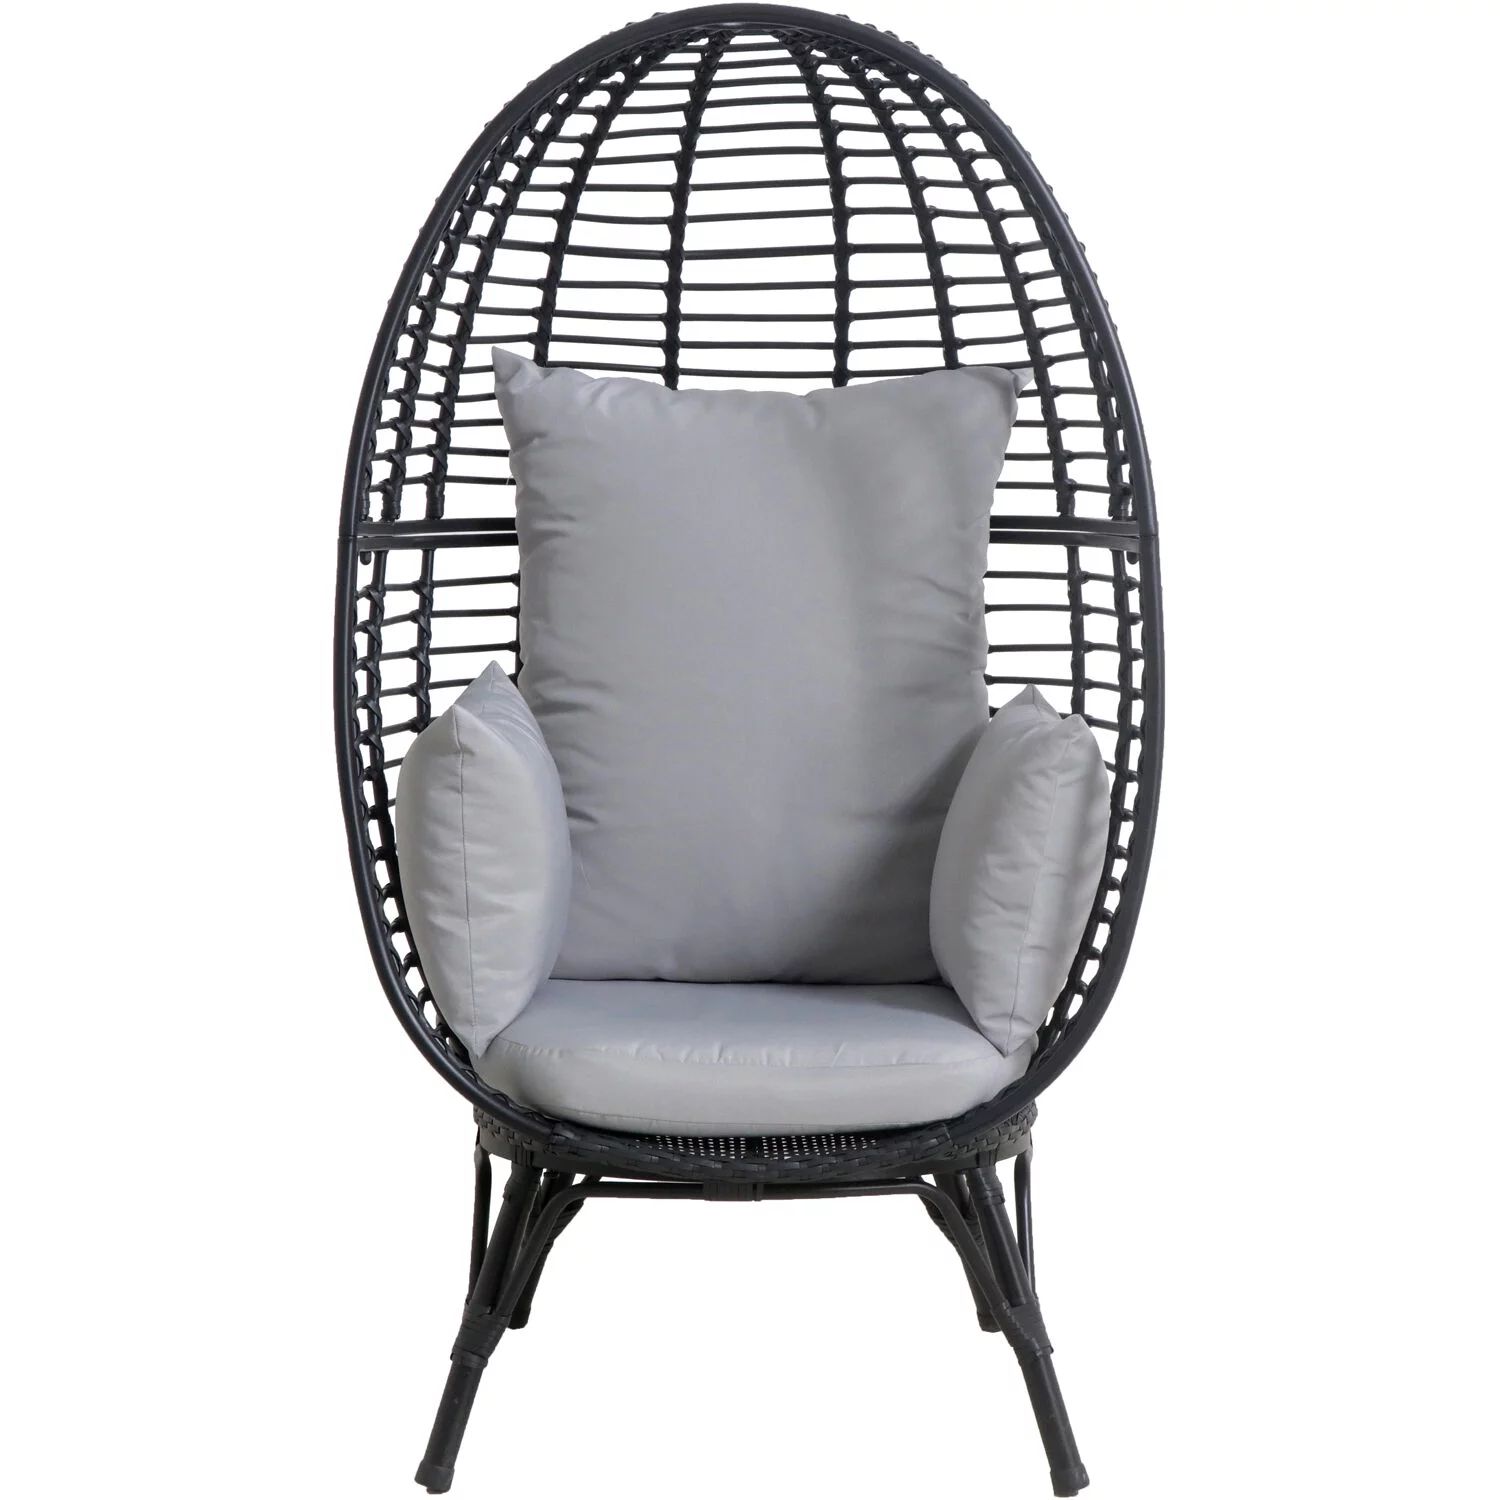 Mōd Poppy Outdoor Stationary Egg Chair in Gray | Walmart (US)